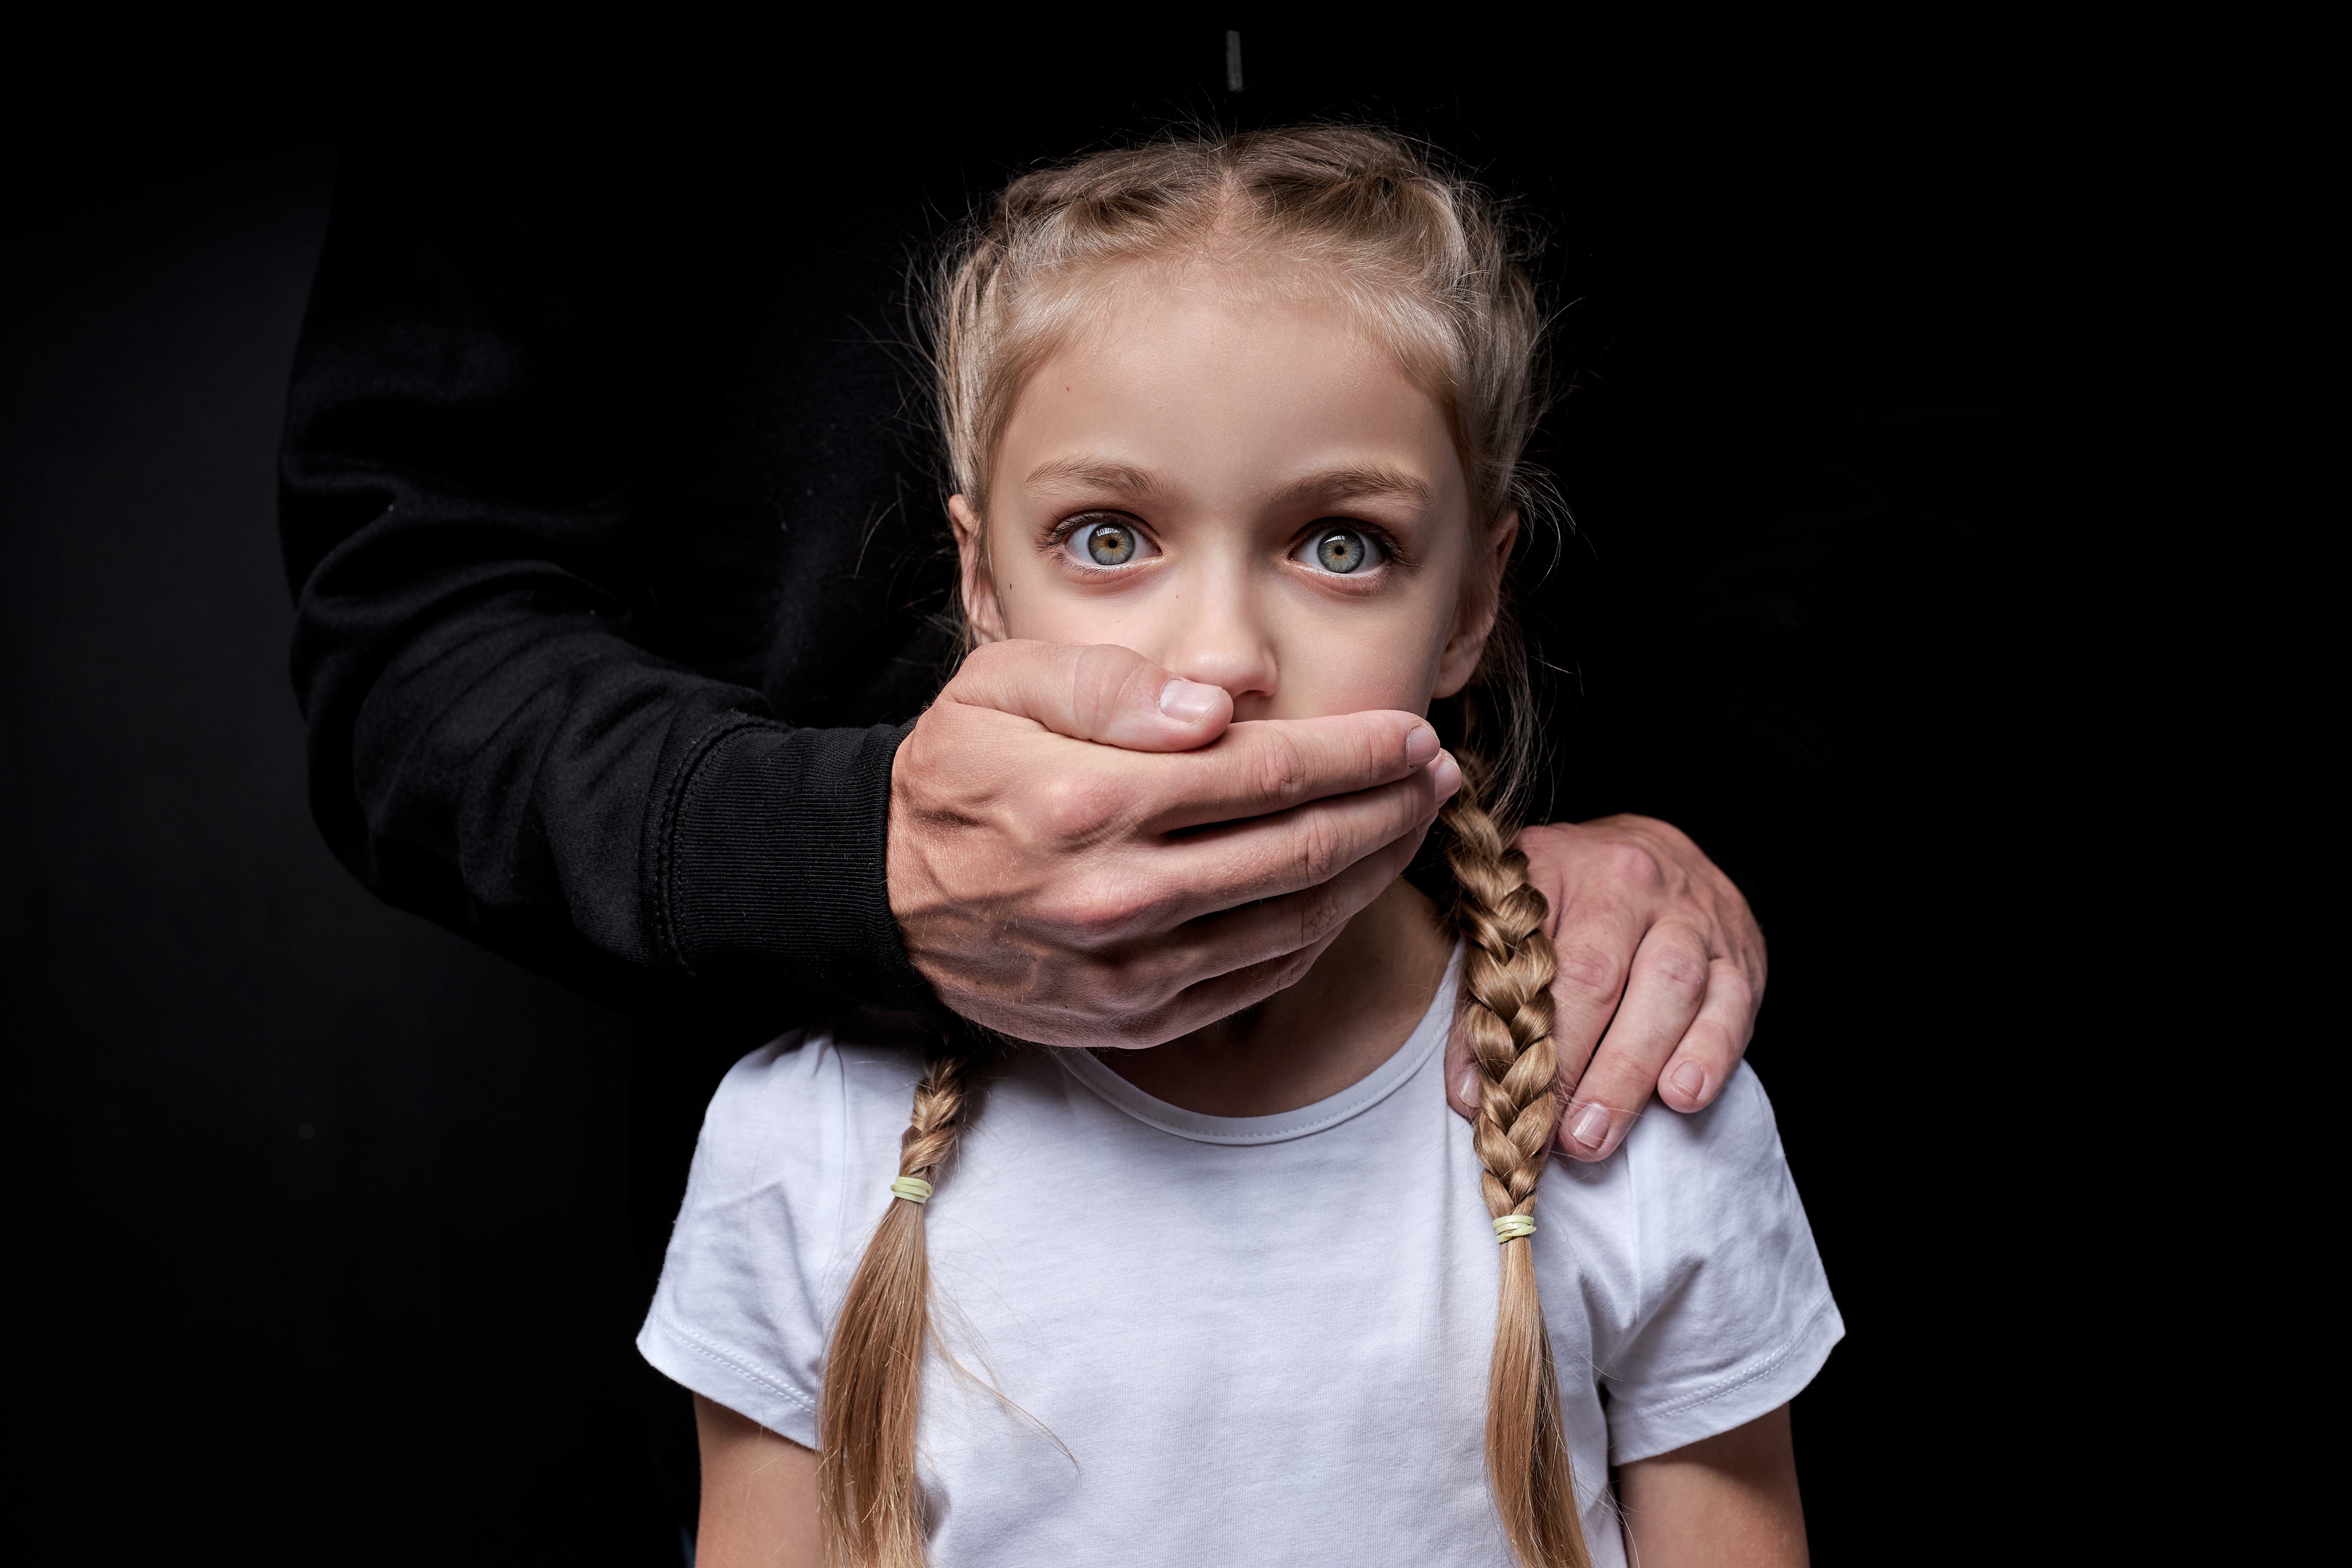 Waarom gesimuleerde ontucht met minderjarigen juist géén oplossing is voor pedofilie